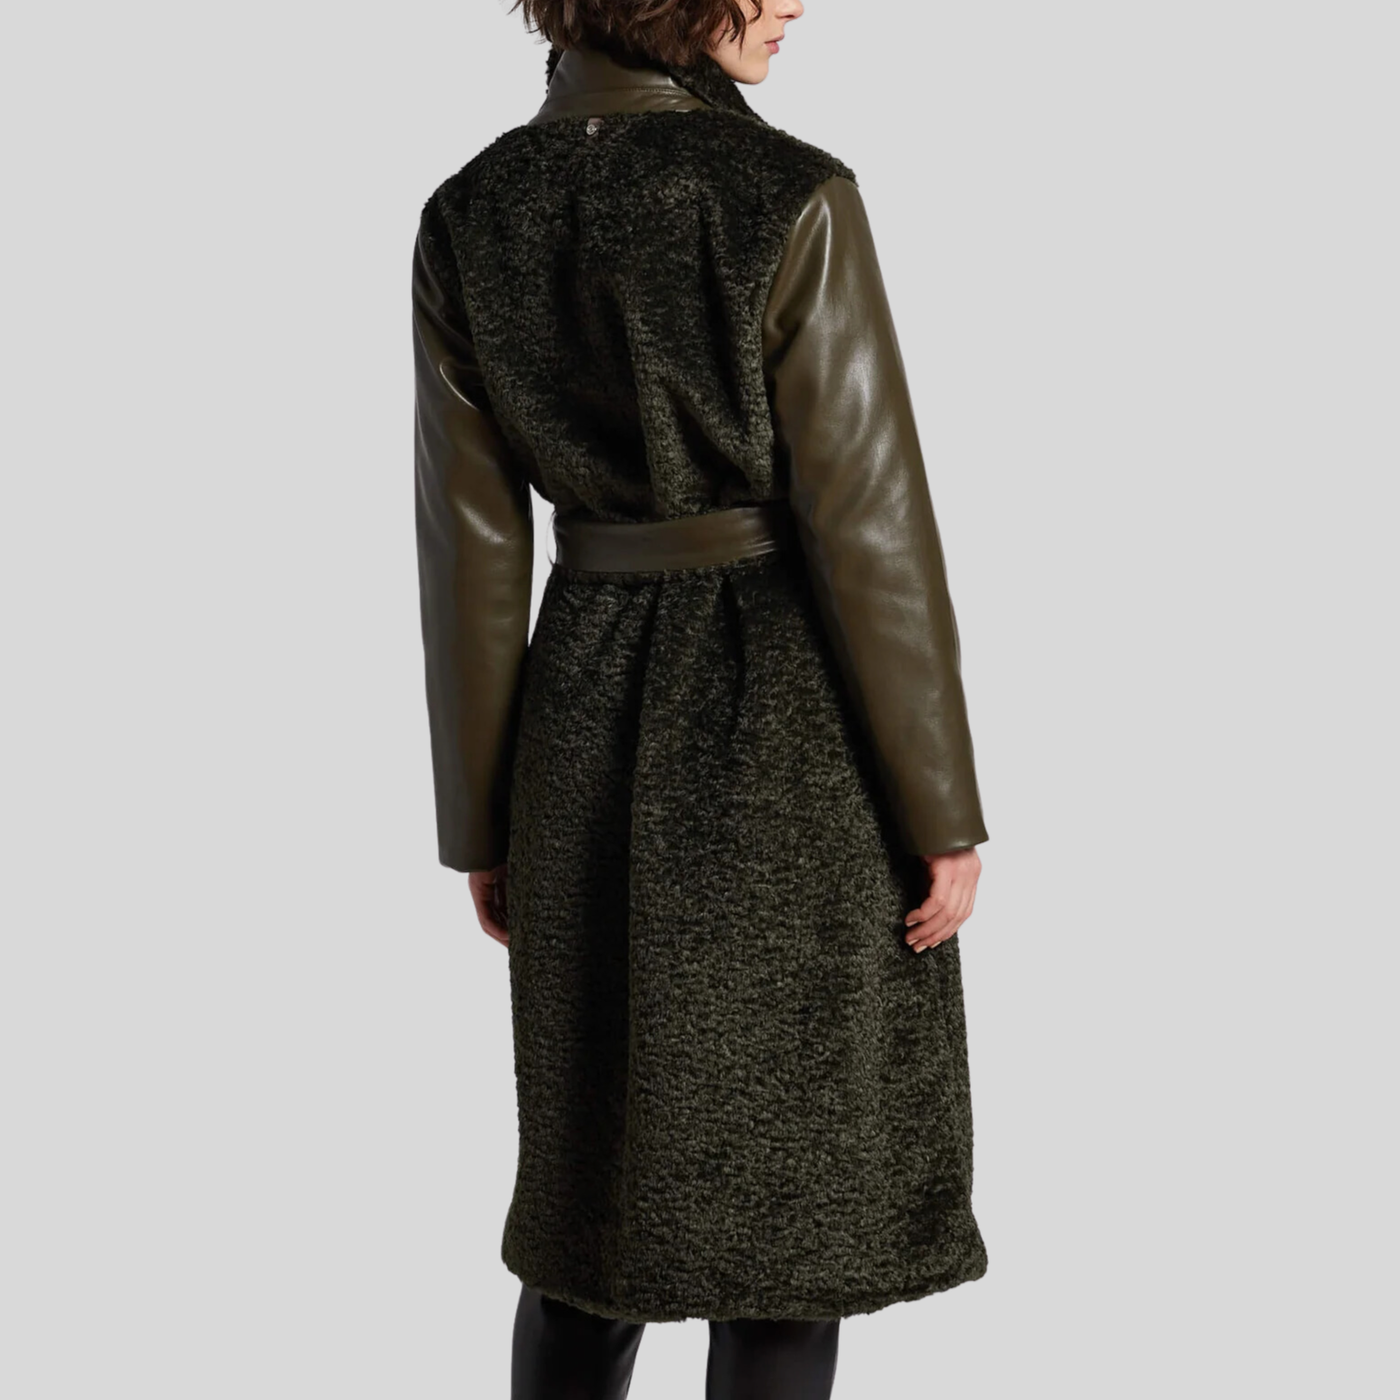 Gotstyle Fashion - Adroit Atelier Coats Faux Fur Vegan Leather Sleeves Long Coat - Olive